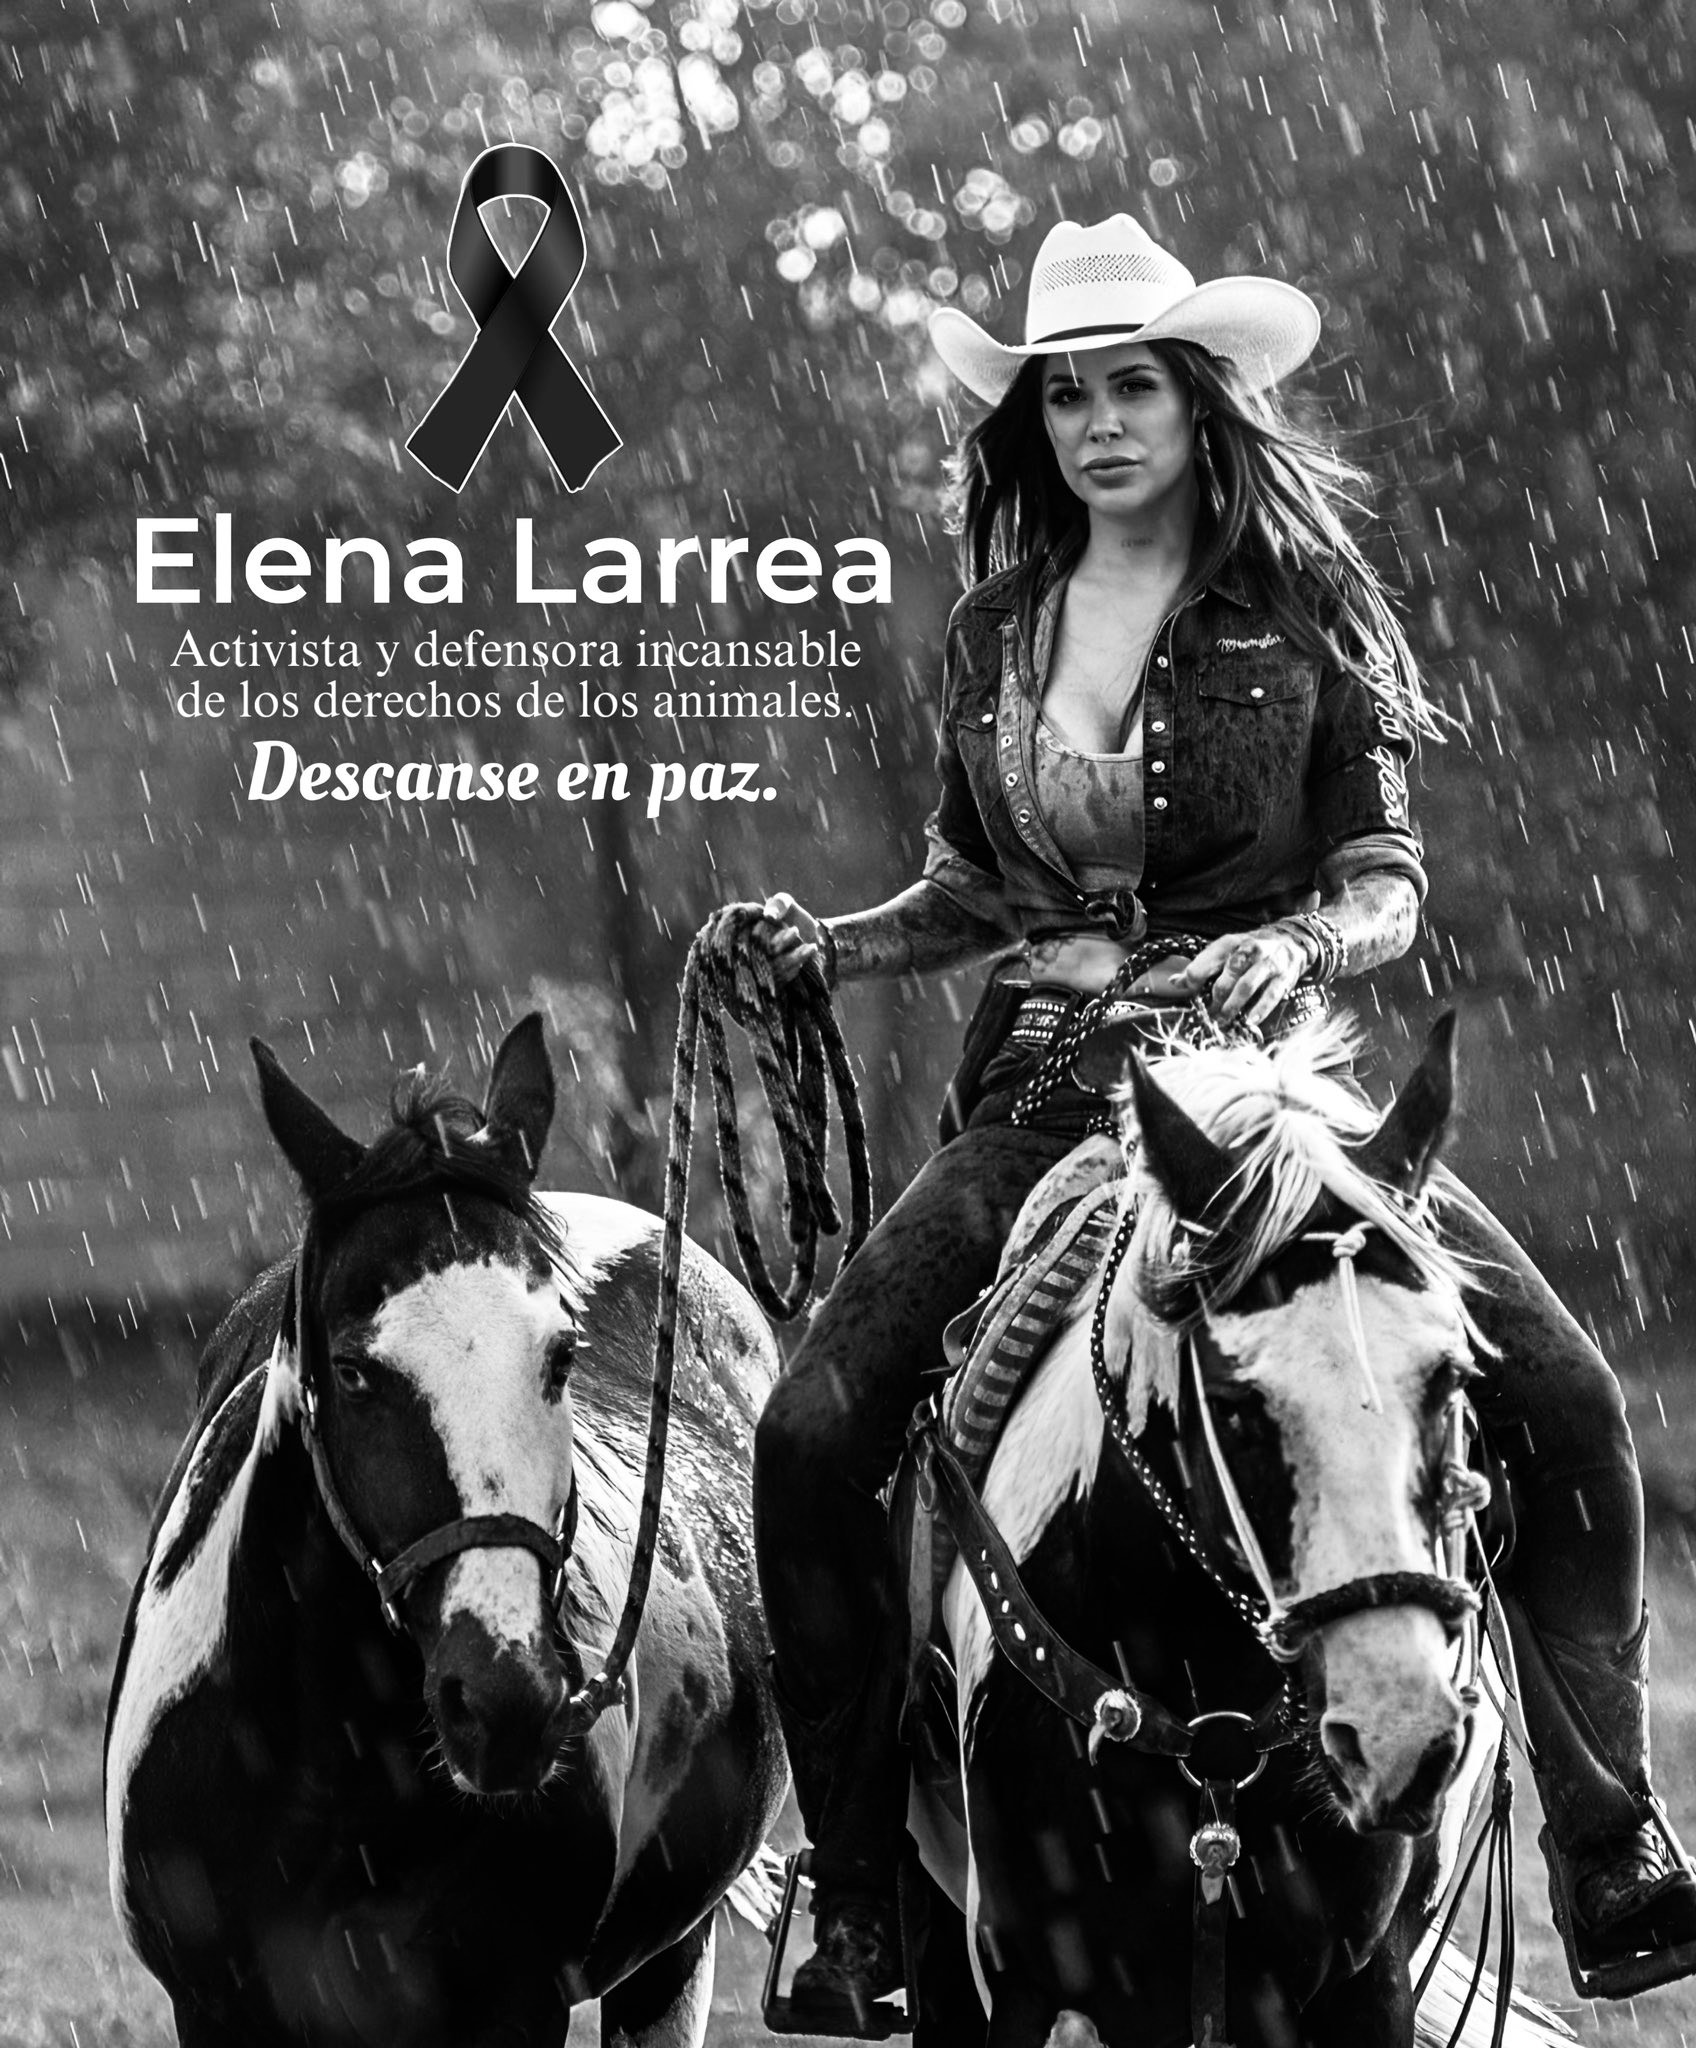 Muere la activista defensora de los animales Elena Larrea